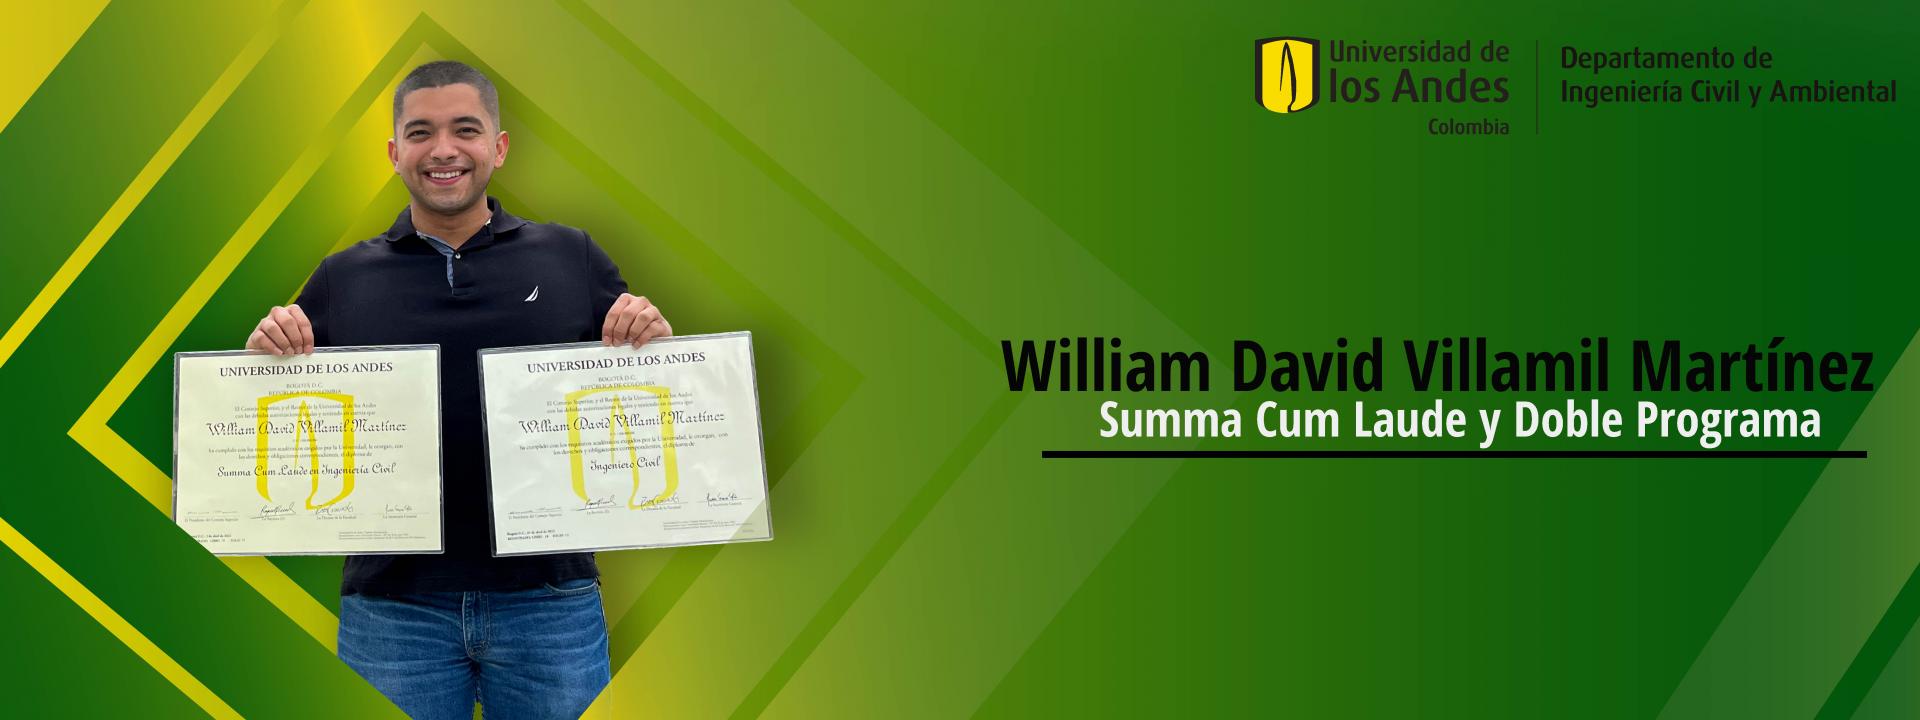 William David Villamil: Grado Suma Cum Laude y doble programa